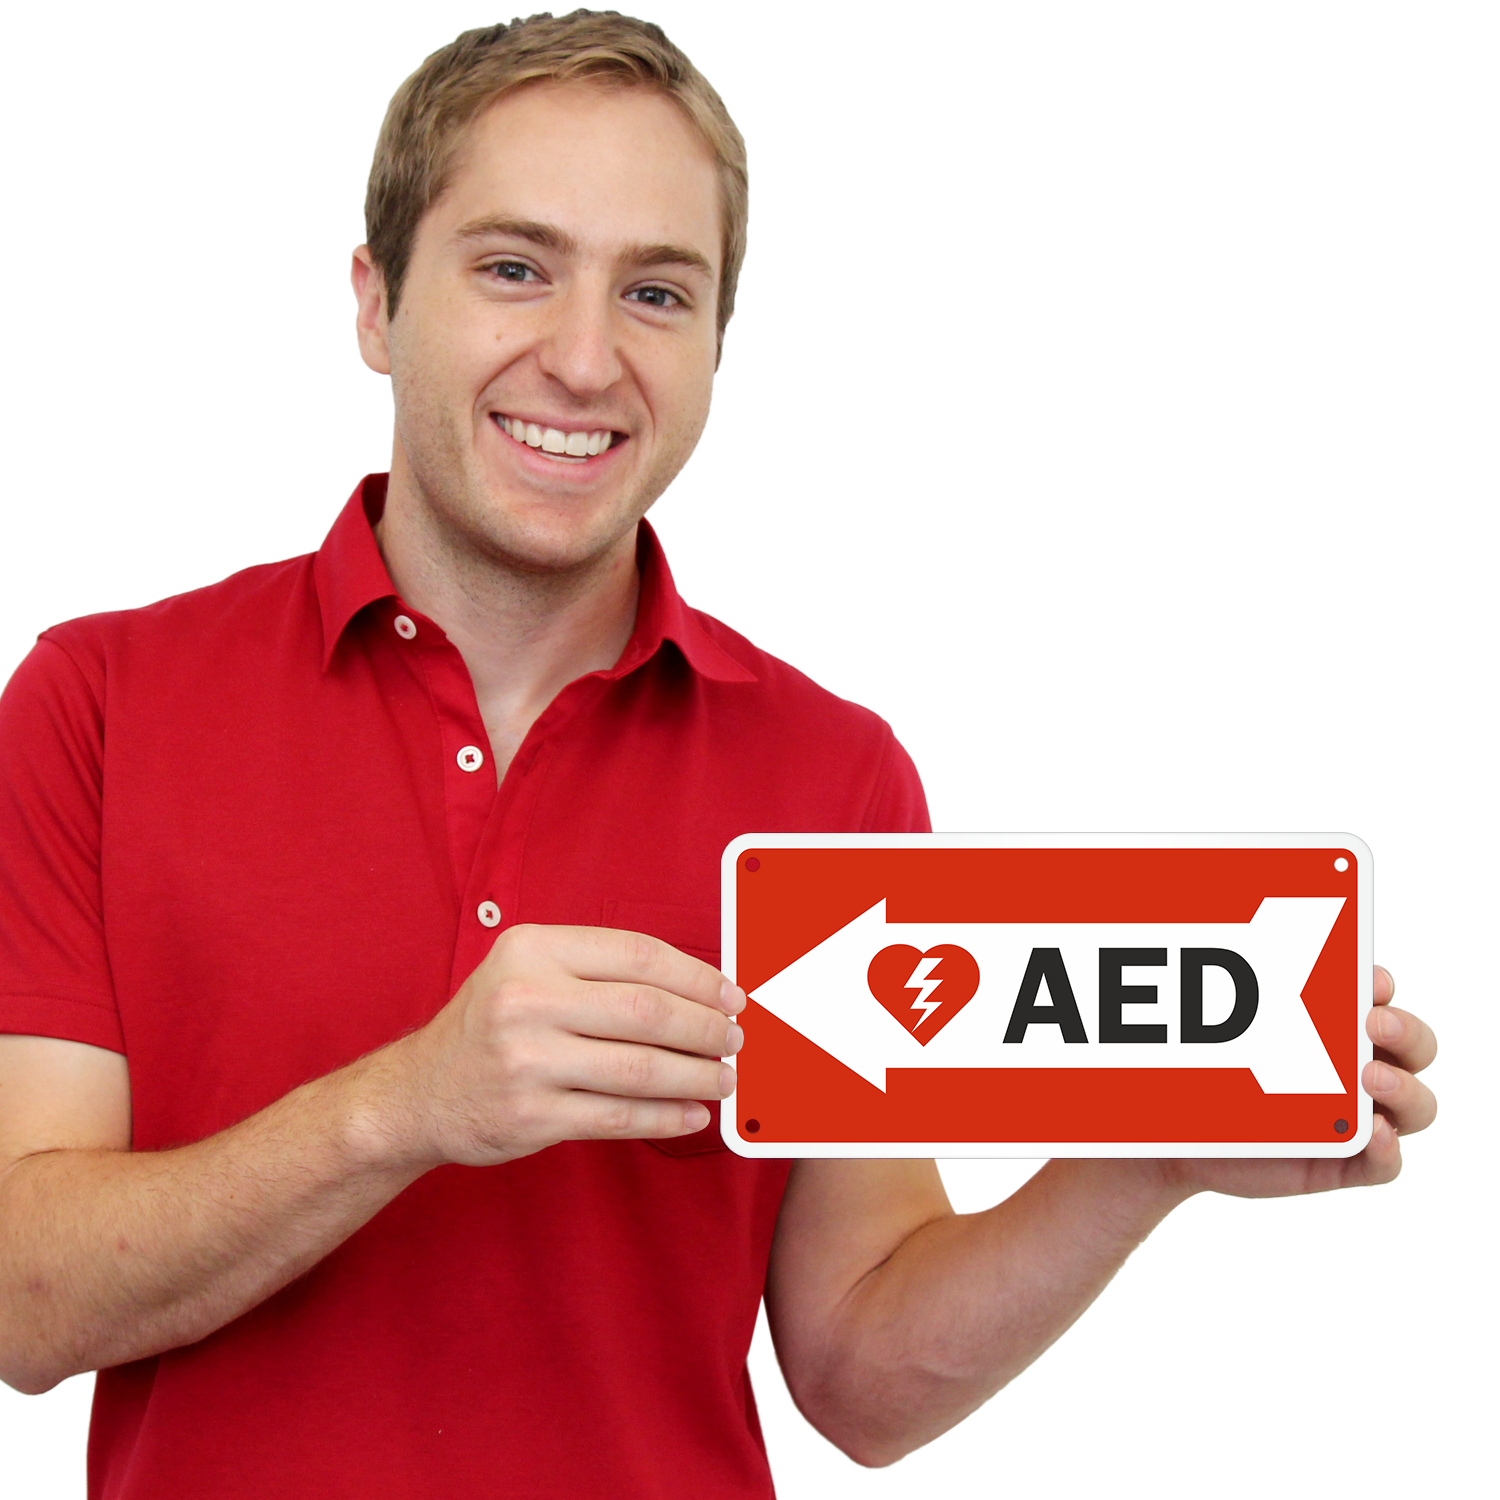 AED signage indicating leftward direction